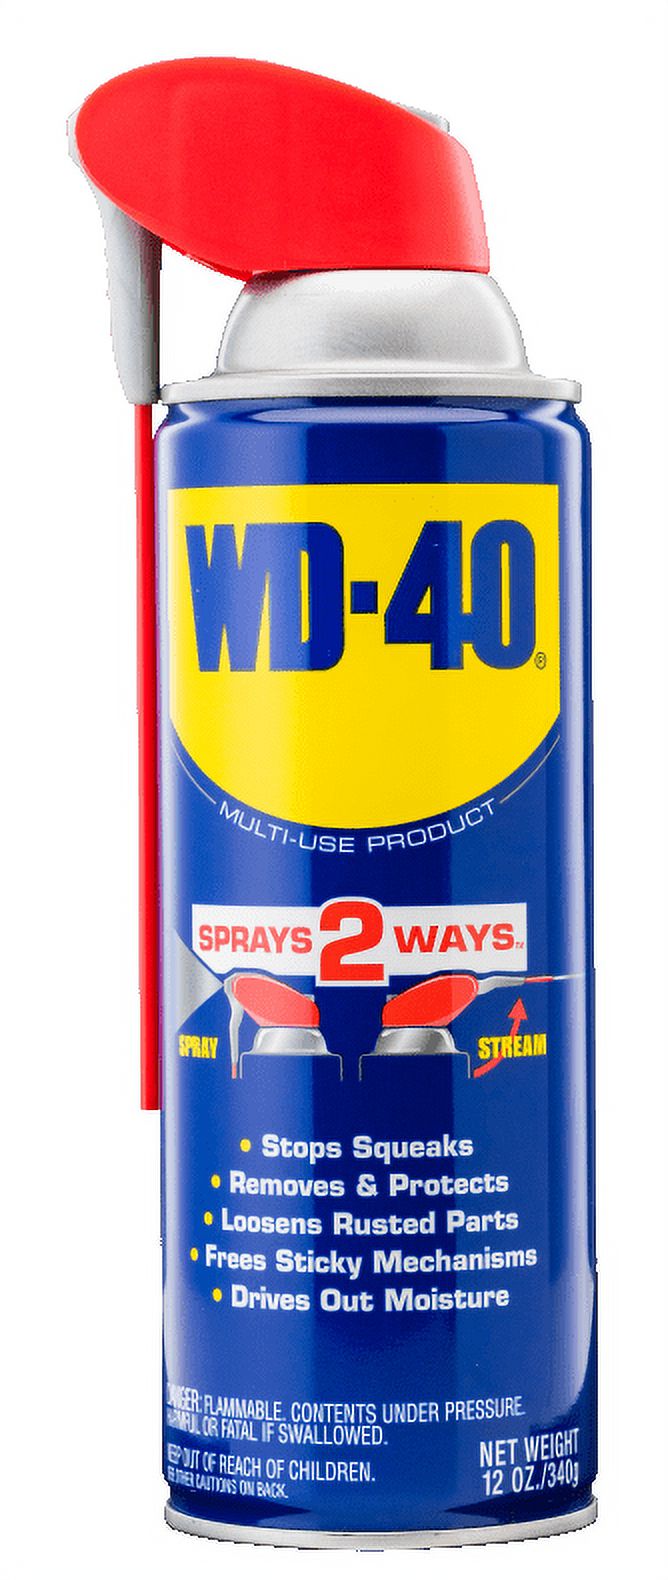 Original WD-40 Formula, Multi-Use Product With Smart Straw Sprays 2 Ways, Multi-Purpose Lubricant Spray, 12 oz - image 1 of 9